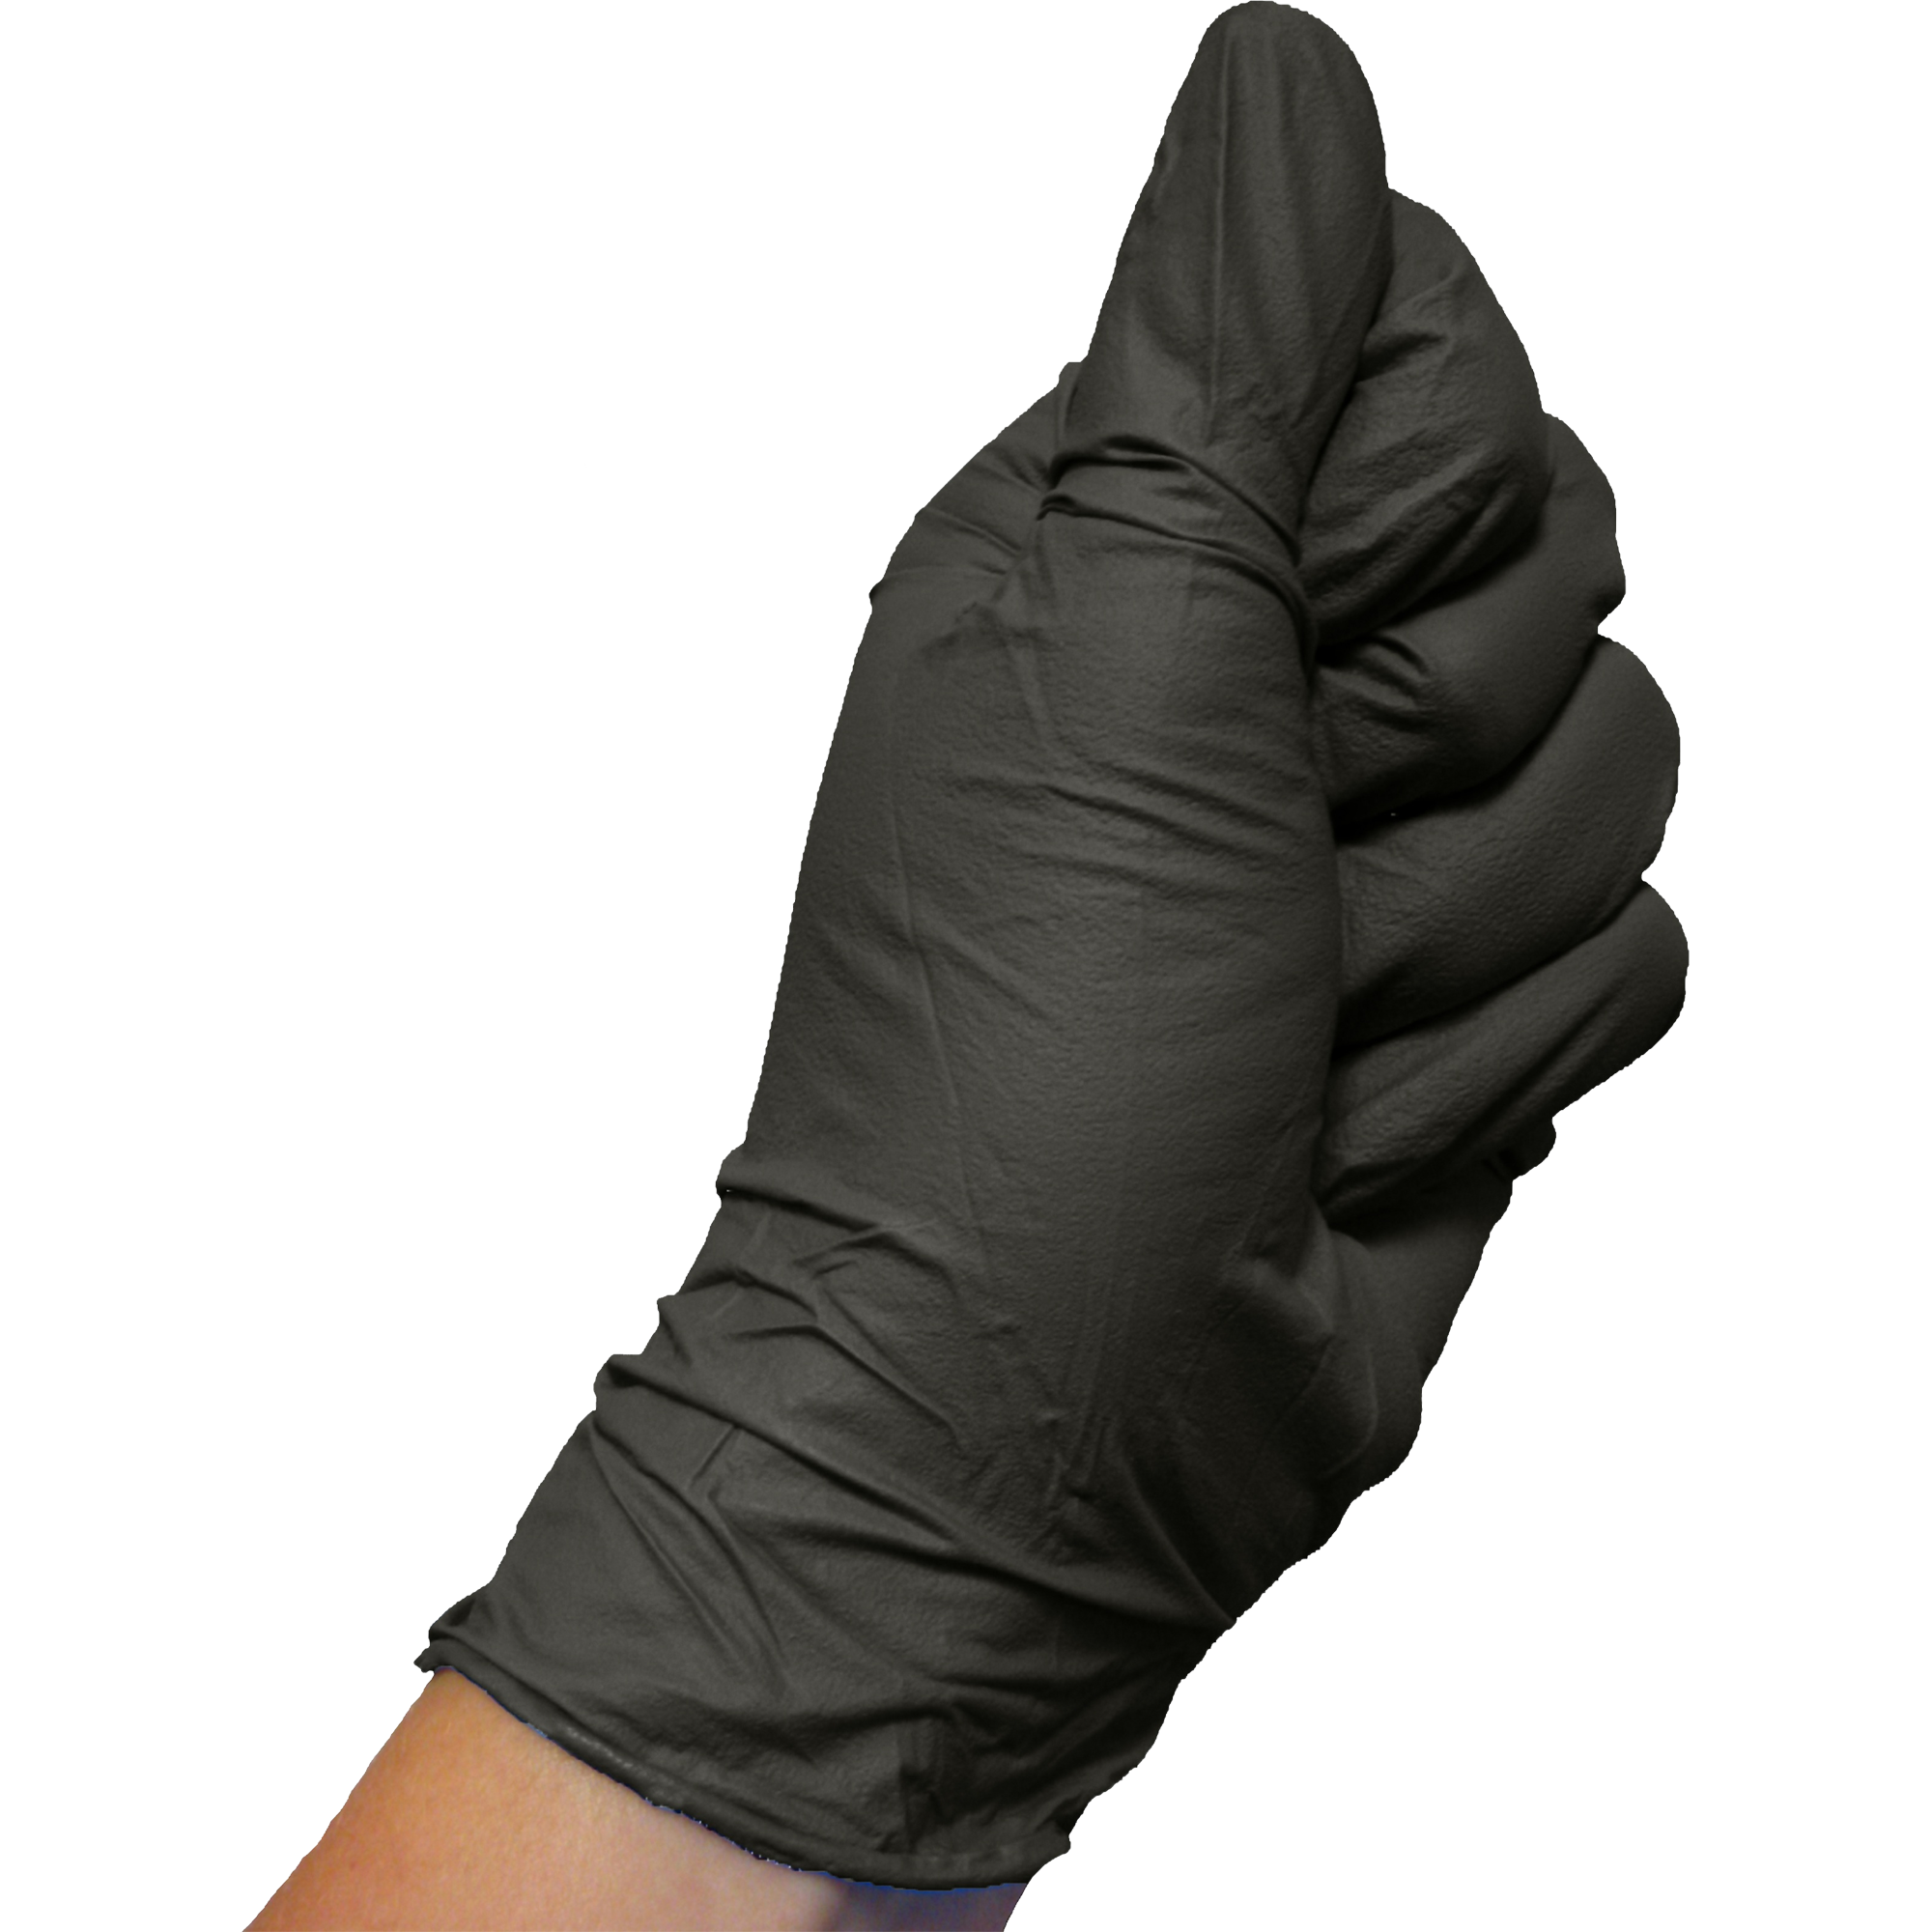 Gloves On Hand  Transparent Image